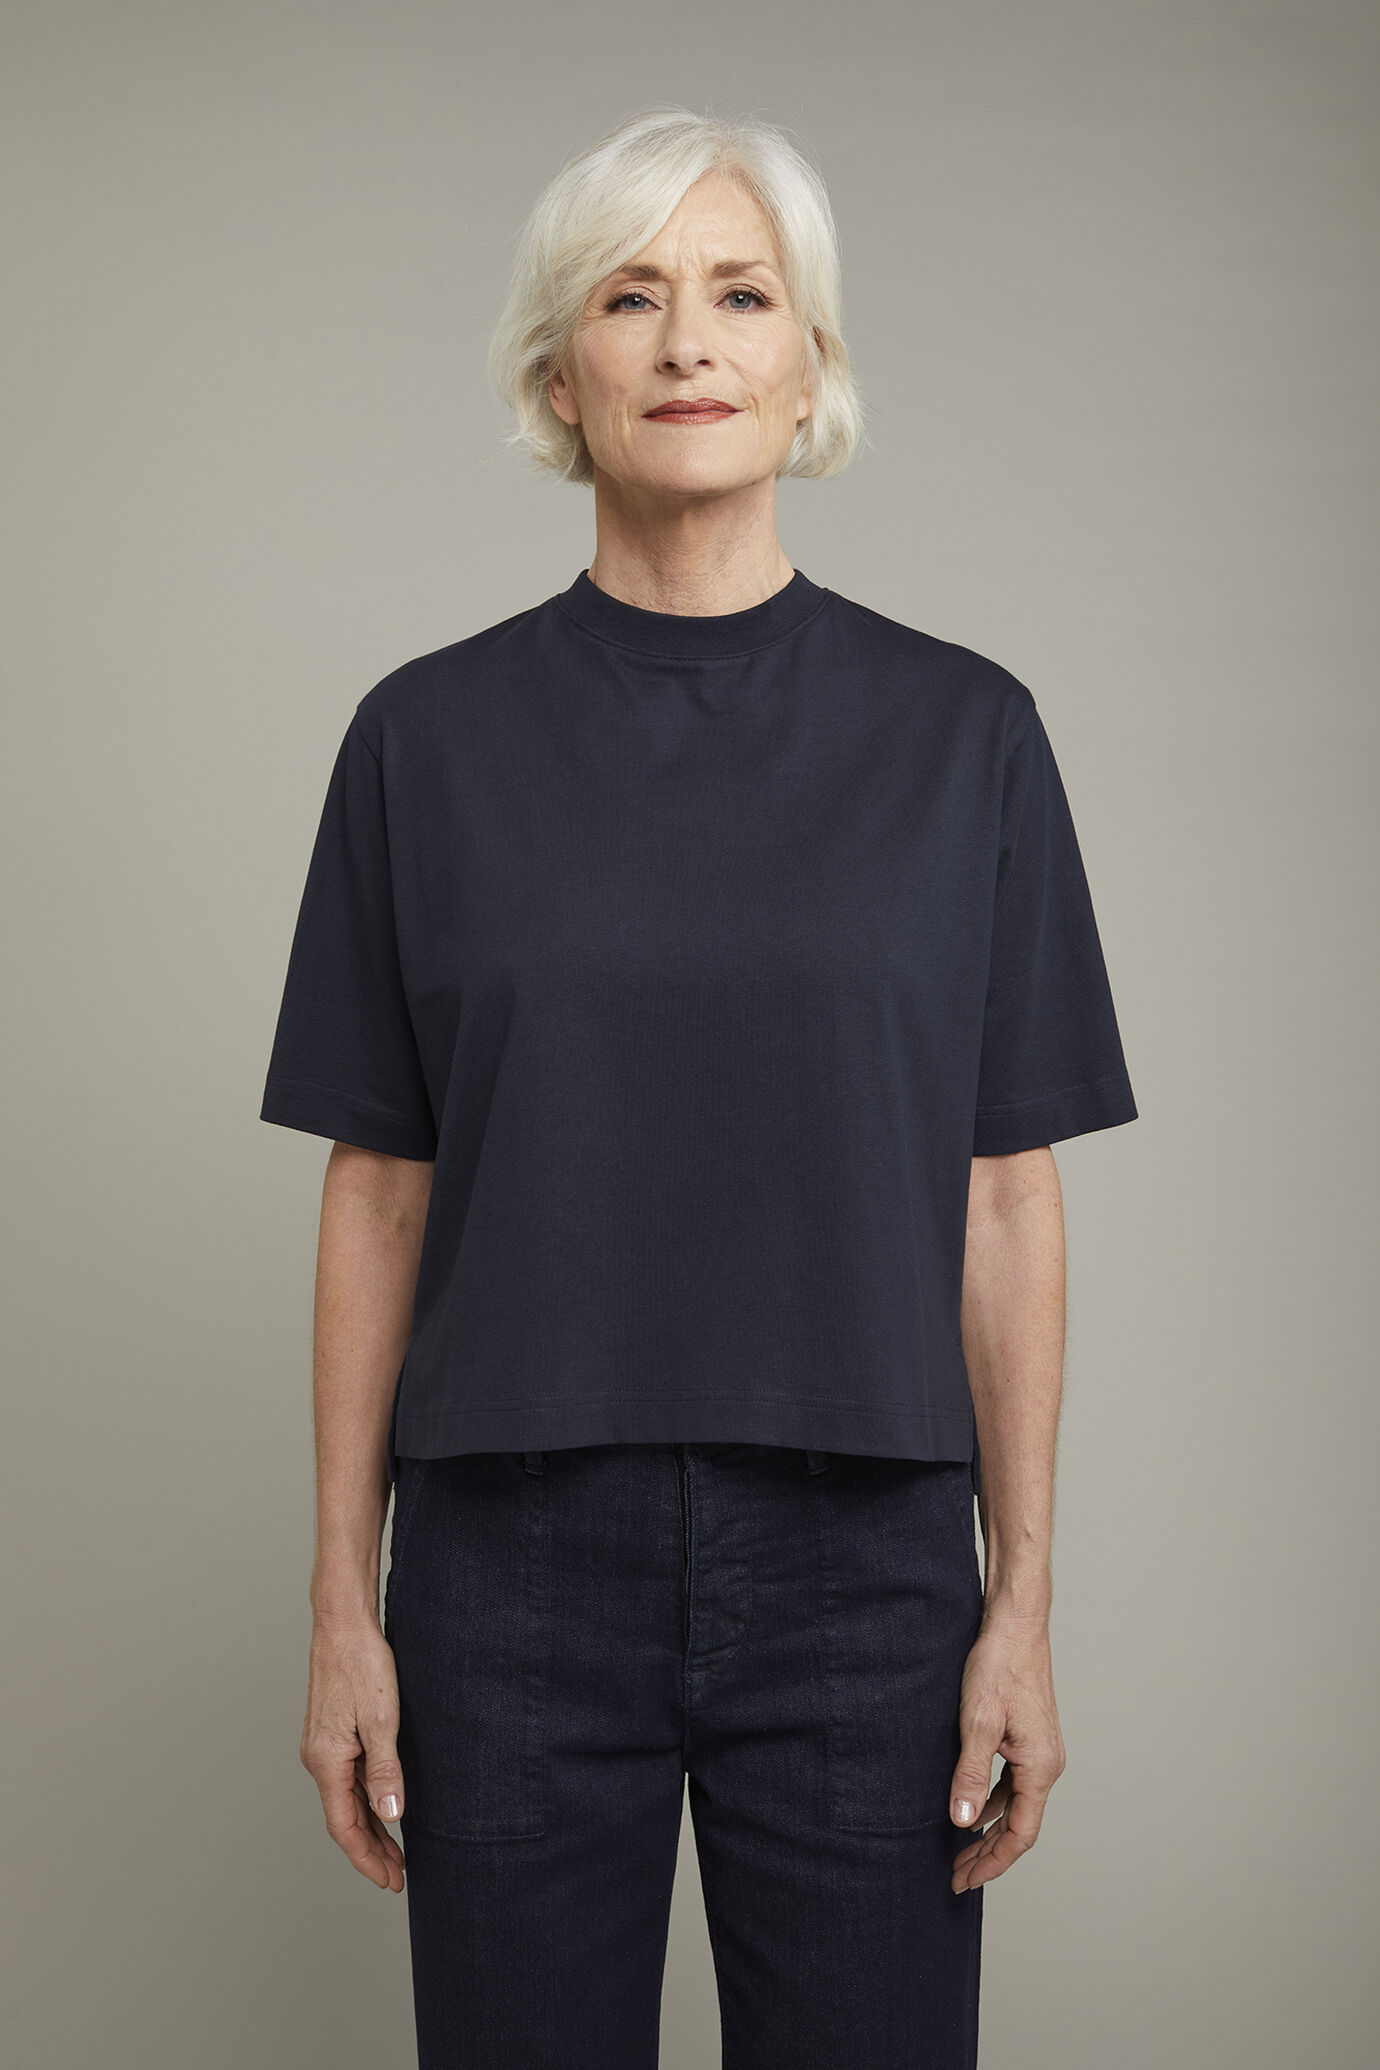 Women’s round neck t-shirt 100% cotton regular fit image number 2